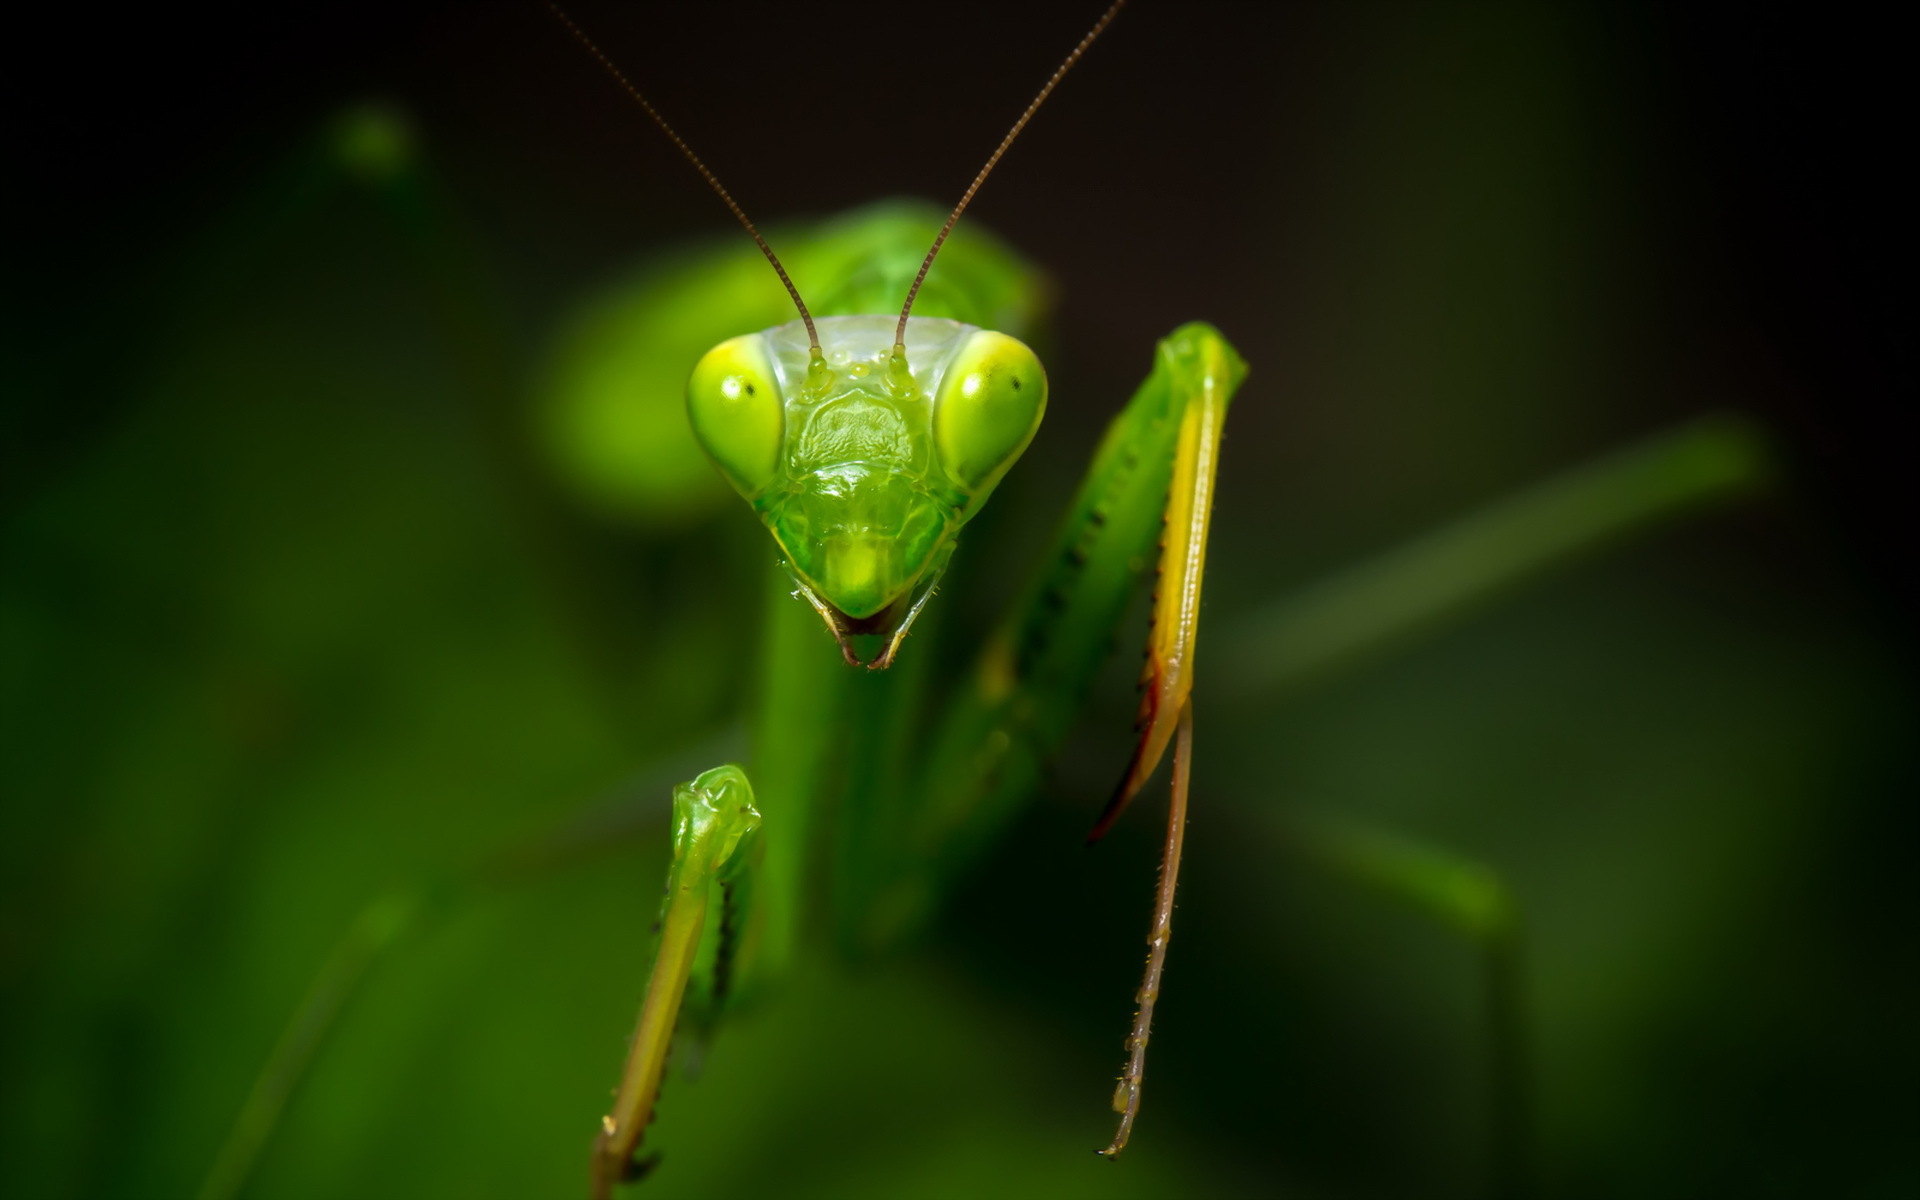 Descarga gratuita de fondo de pantalla para móvil de Mantis Religiosa, Insectos, Animales.